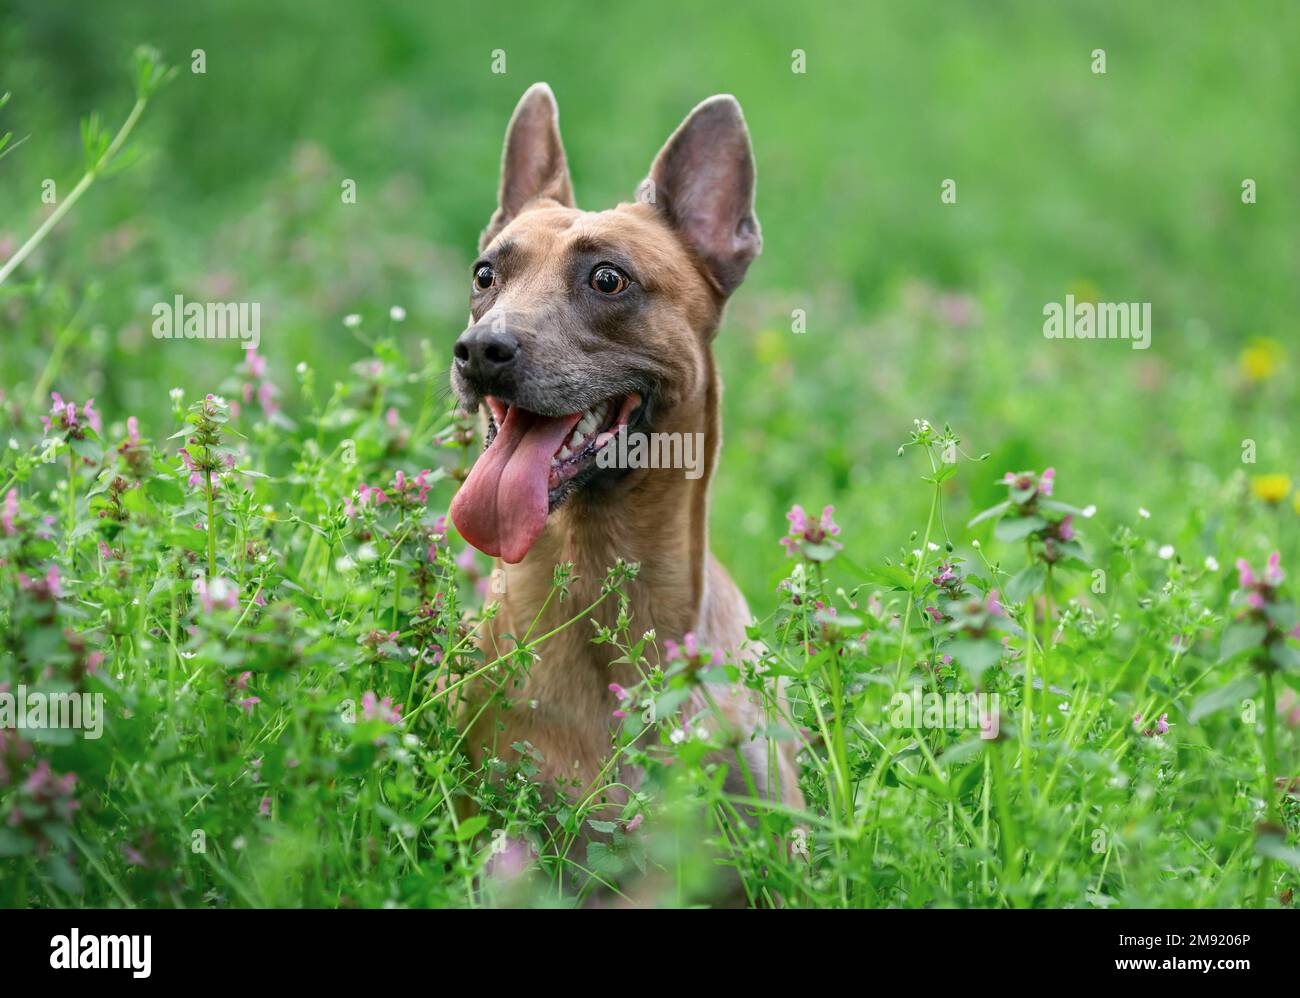 Divertente cane felice di razza belga malinois seduto in erba verde in estate Foto Stock